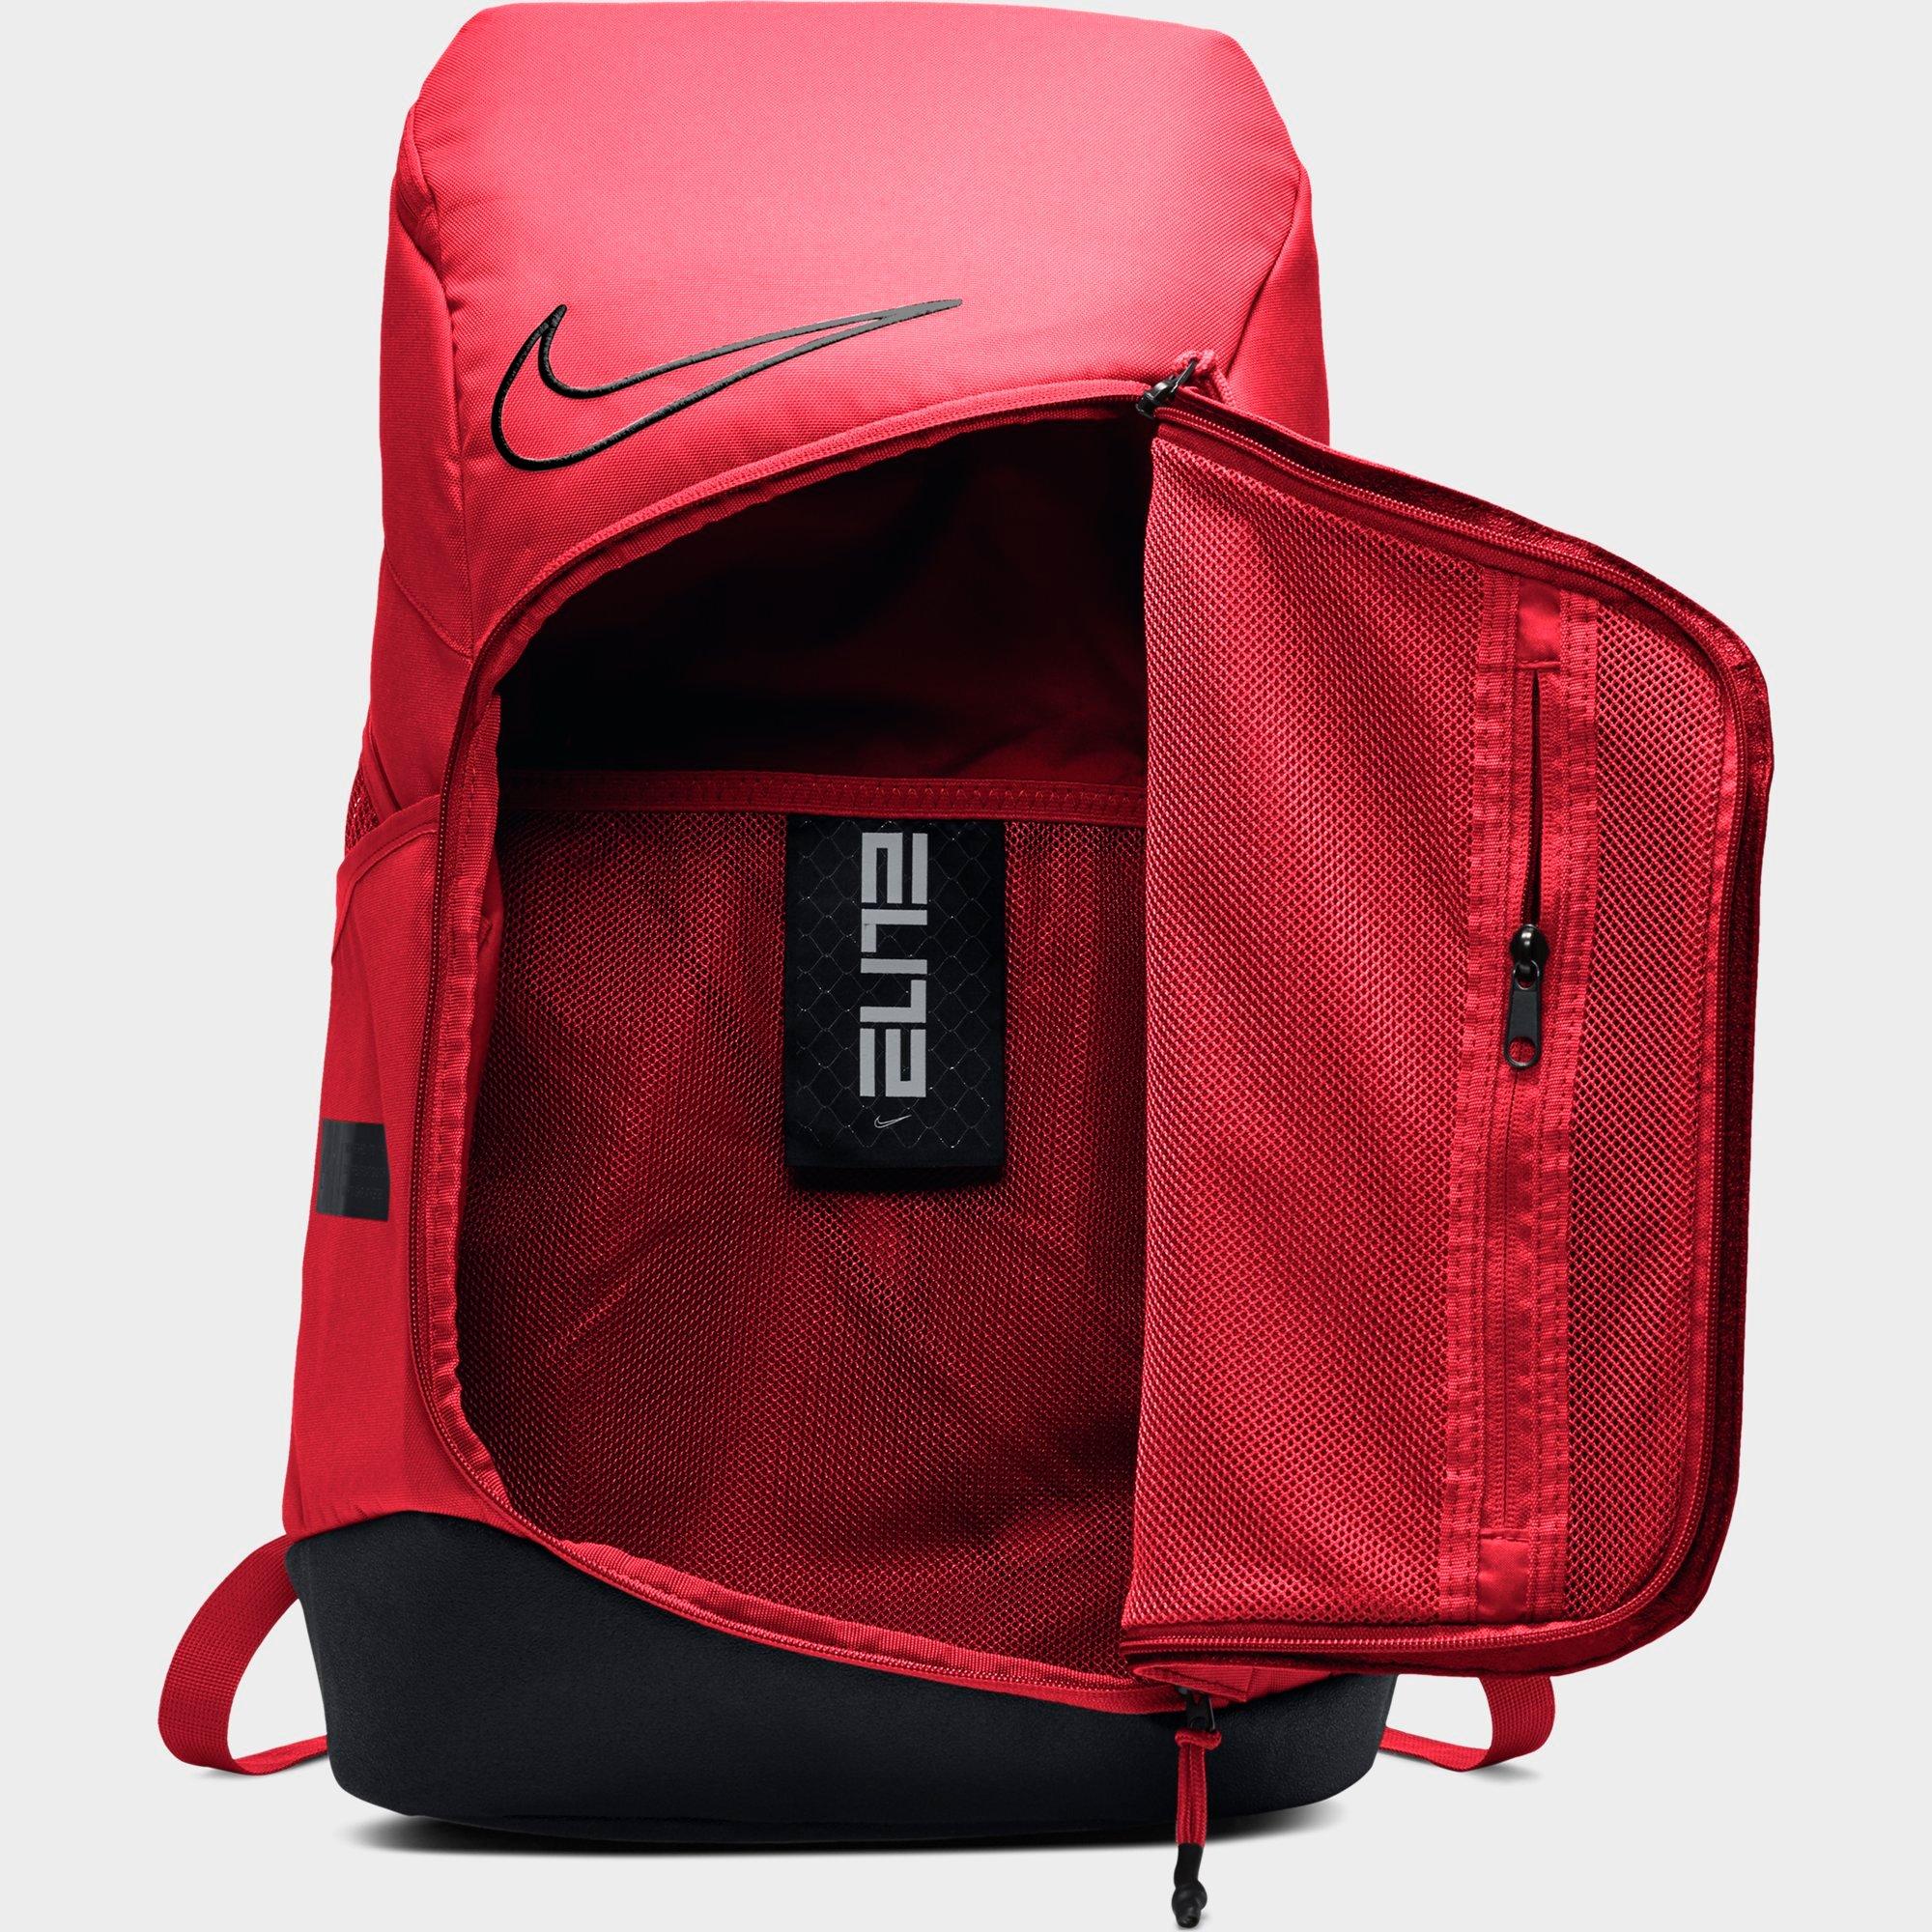 nike elite backpack red and black